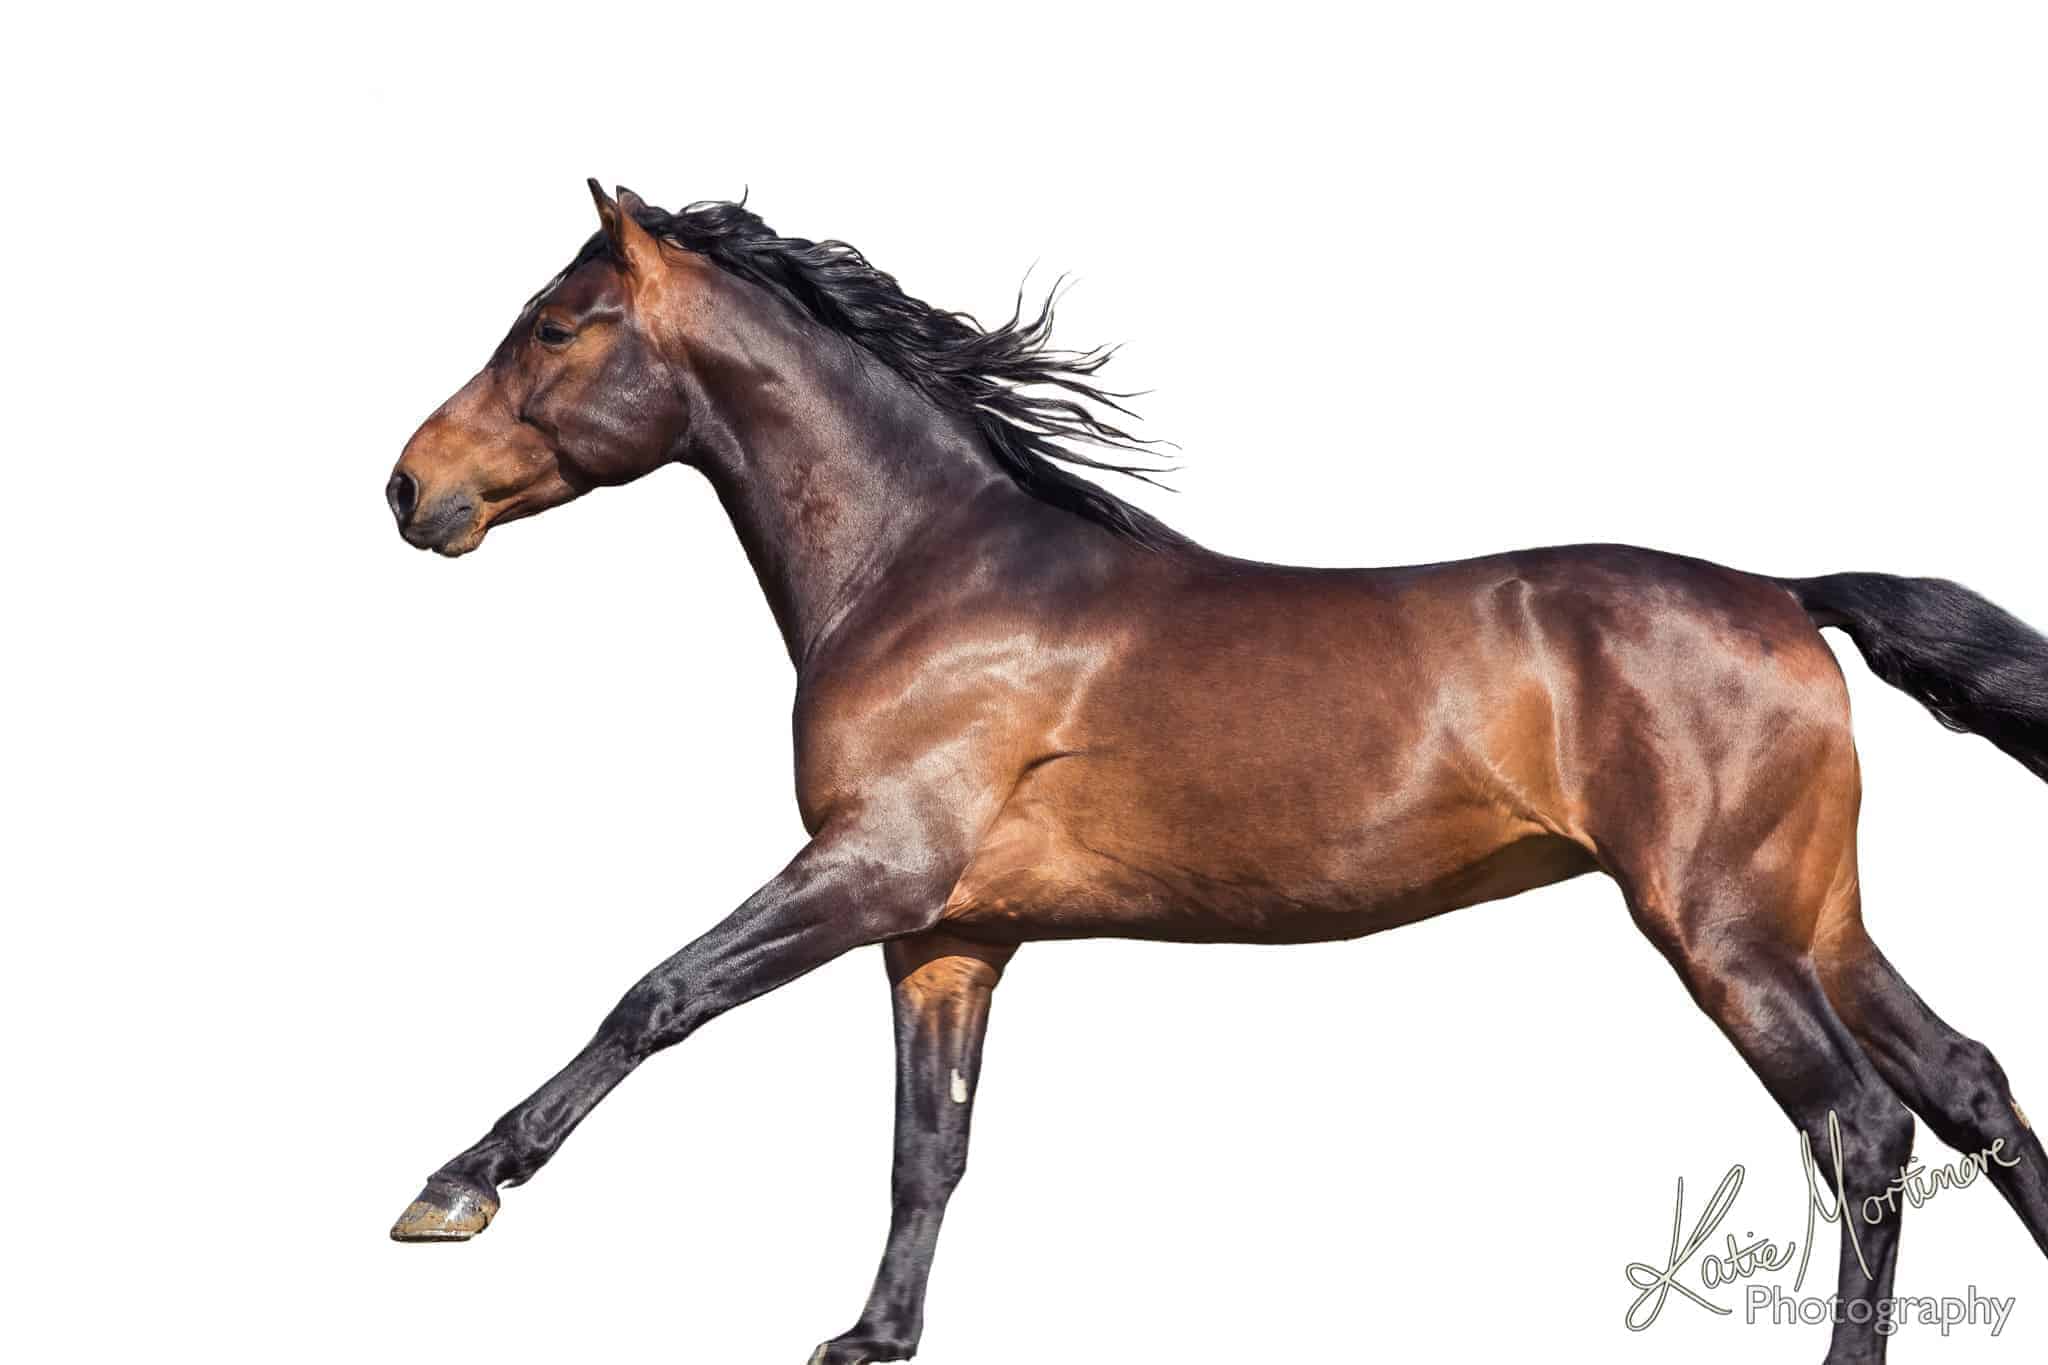 equestrian fine art prints katie mortimore photography